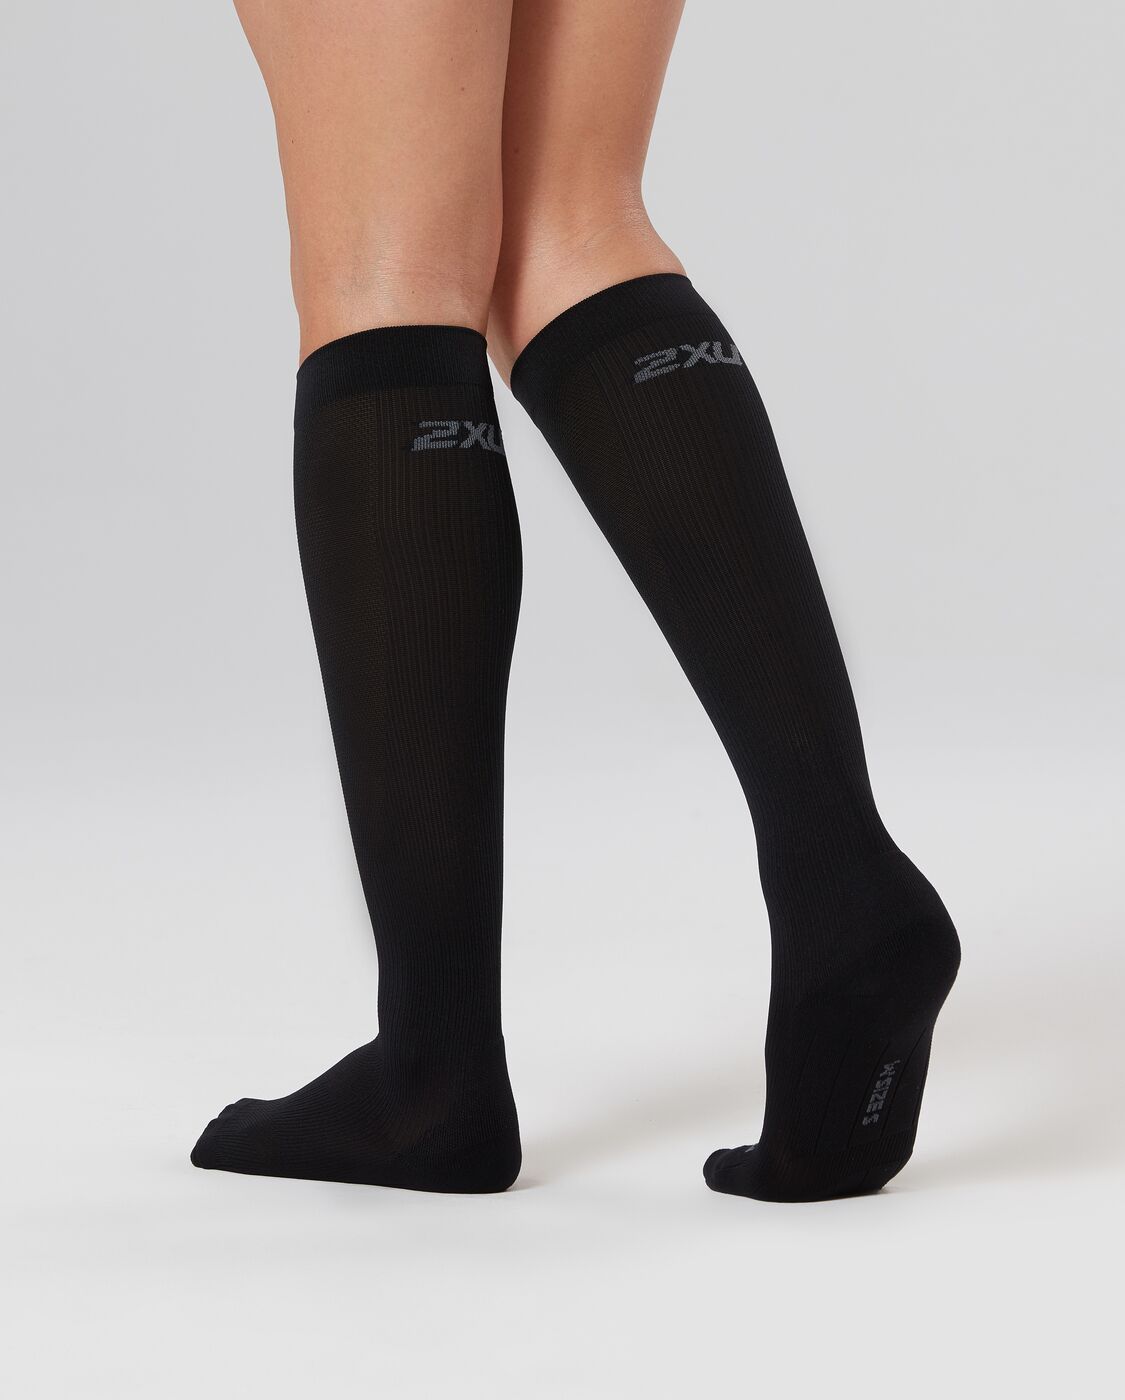 Perf Run Knee Length Compression Socks, Black/Black